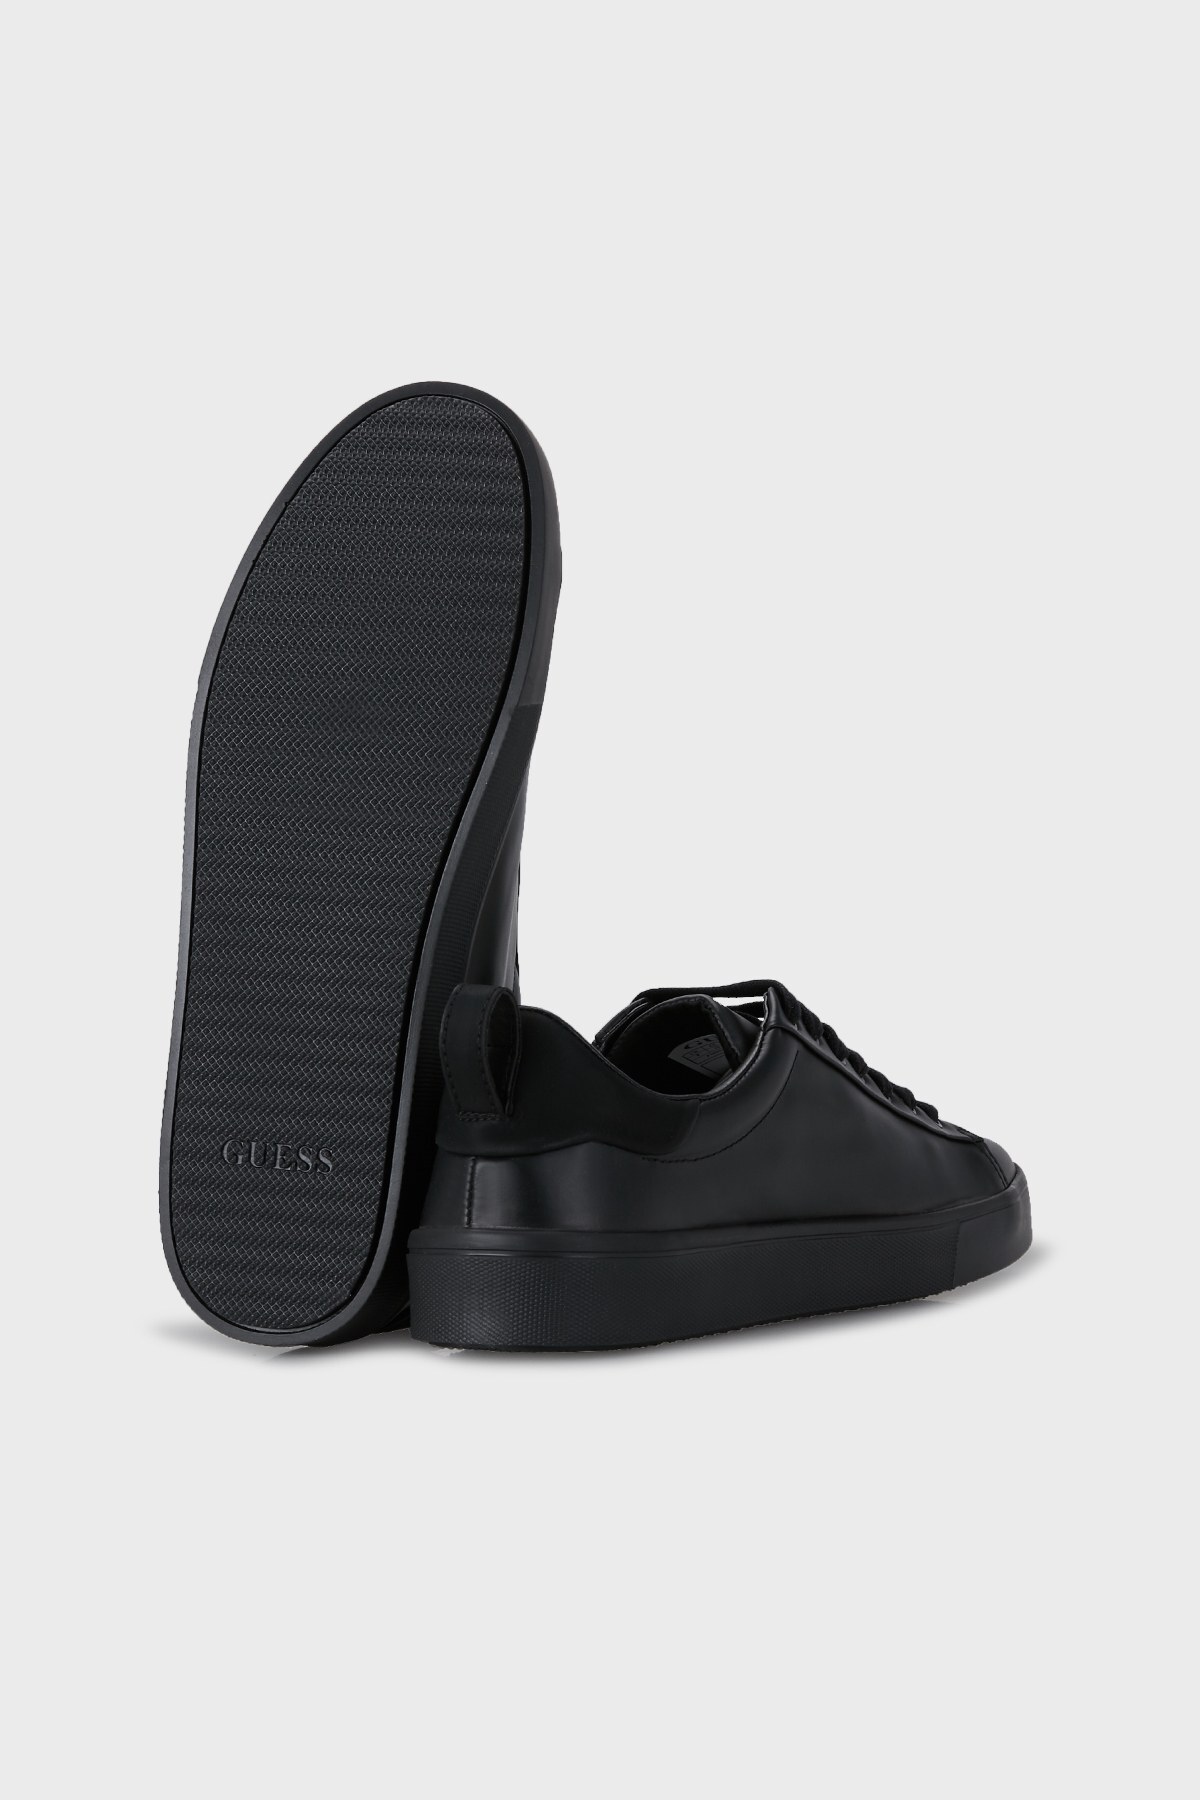 Guess Logolu Bağcıklı Sneaker Erkek Ayakkabı FM9VI8LEA12 BLACK SİYAH